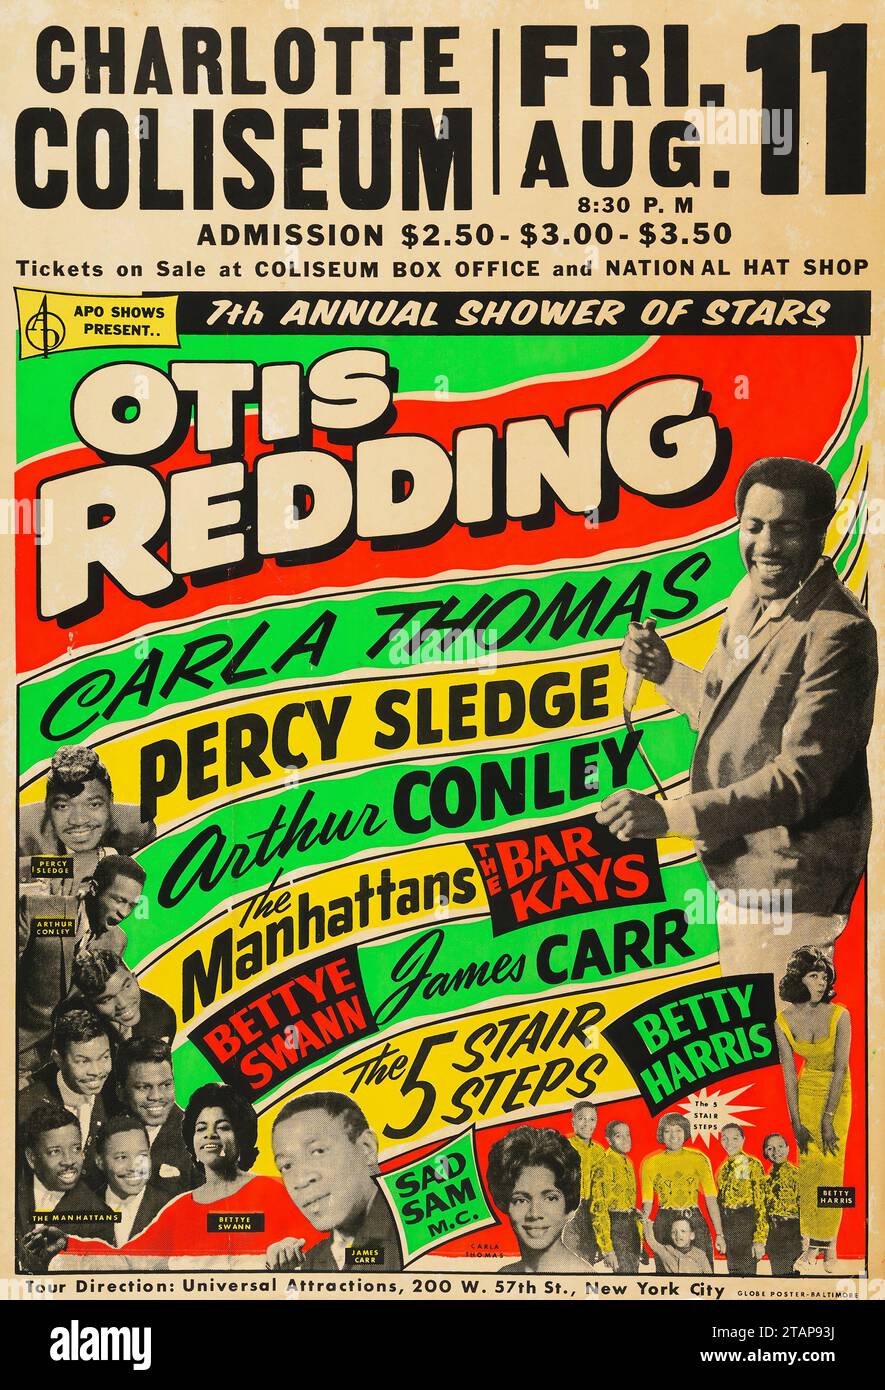 Otis Redding Charlotte Coliseum Concert Poster (APO Shows Present, August 11, 1967) Carla Thomas, Percy Sledge, Arthur Conley, The Manhattans, James Carr, 5 Stair Steps Stock Photo